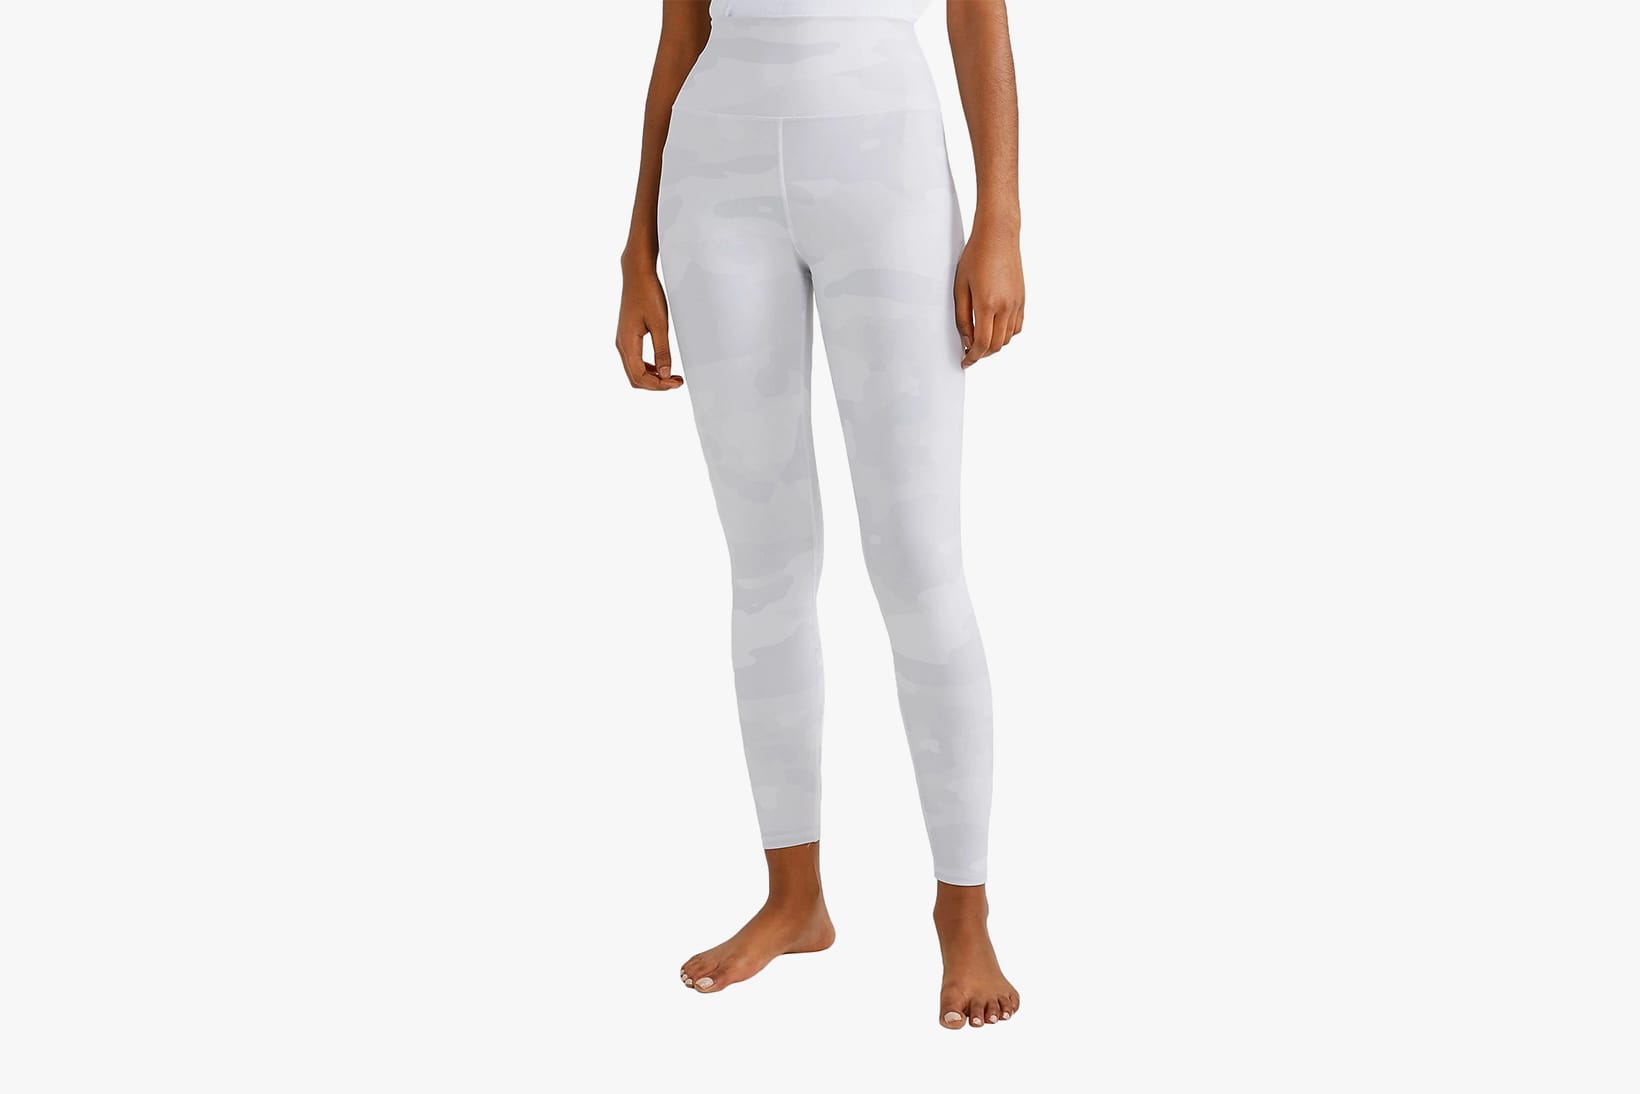 white nike yoga pants